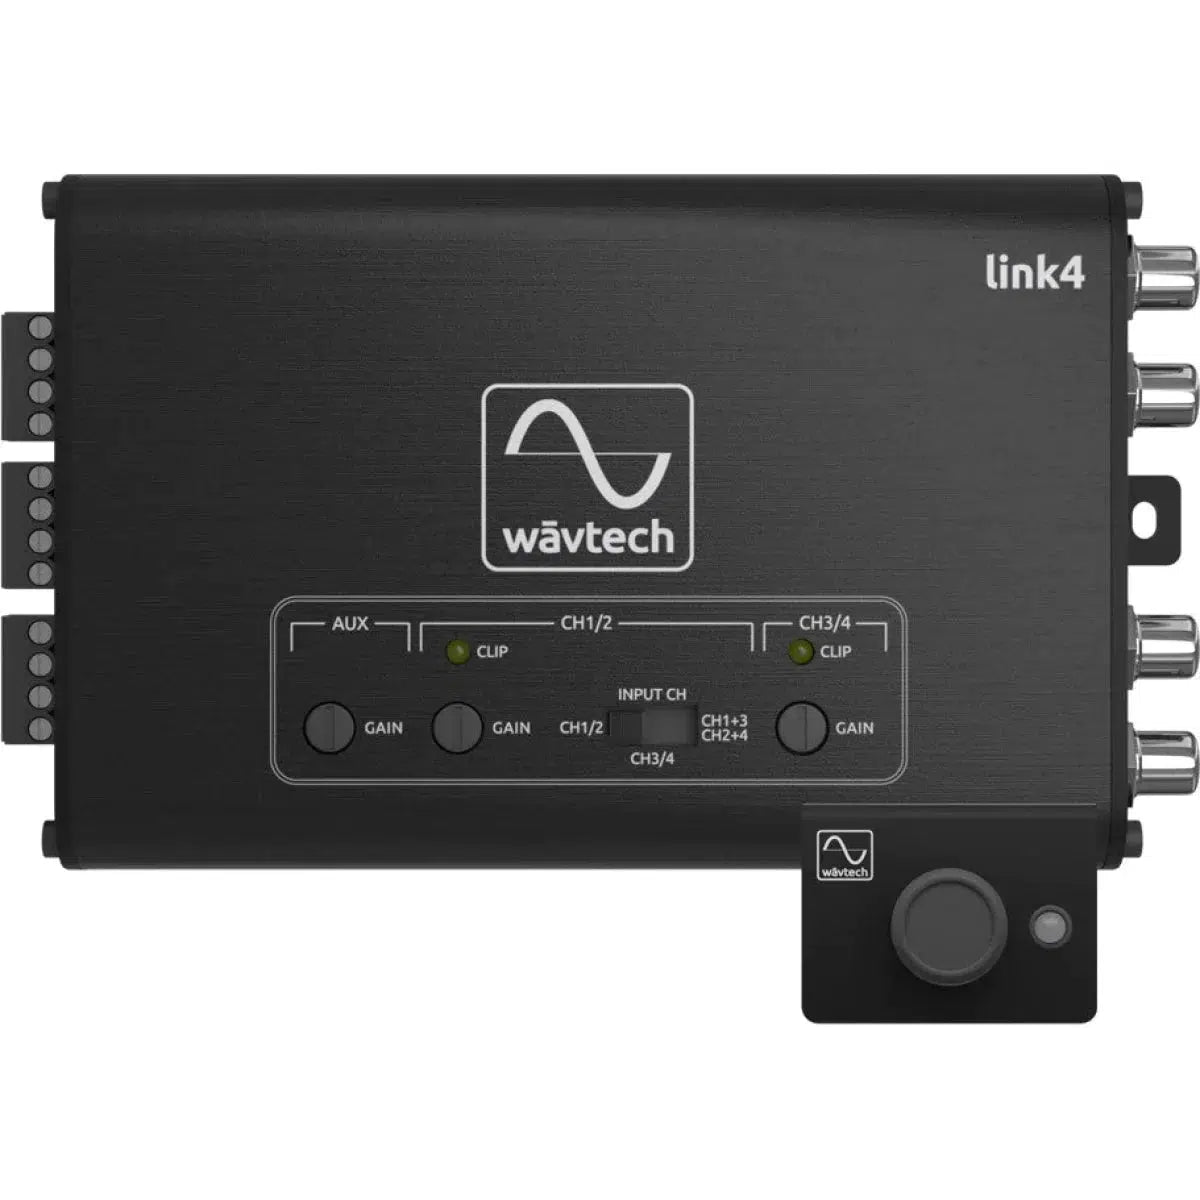 Wavtech-Link4-High-Low Adaptador-Masori.de